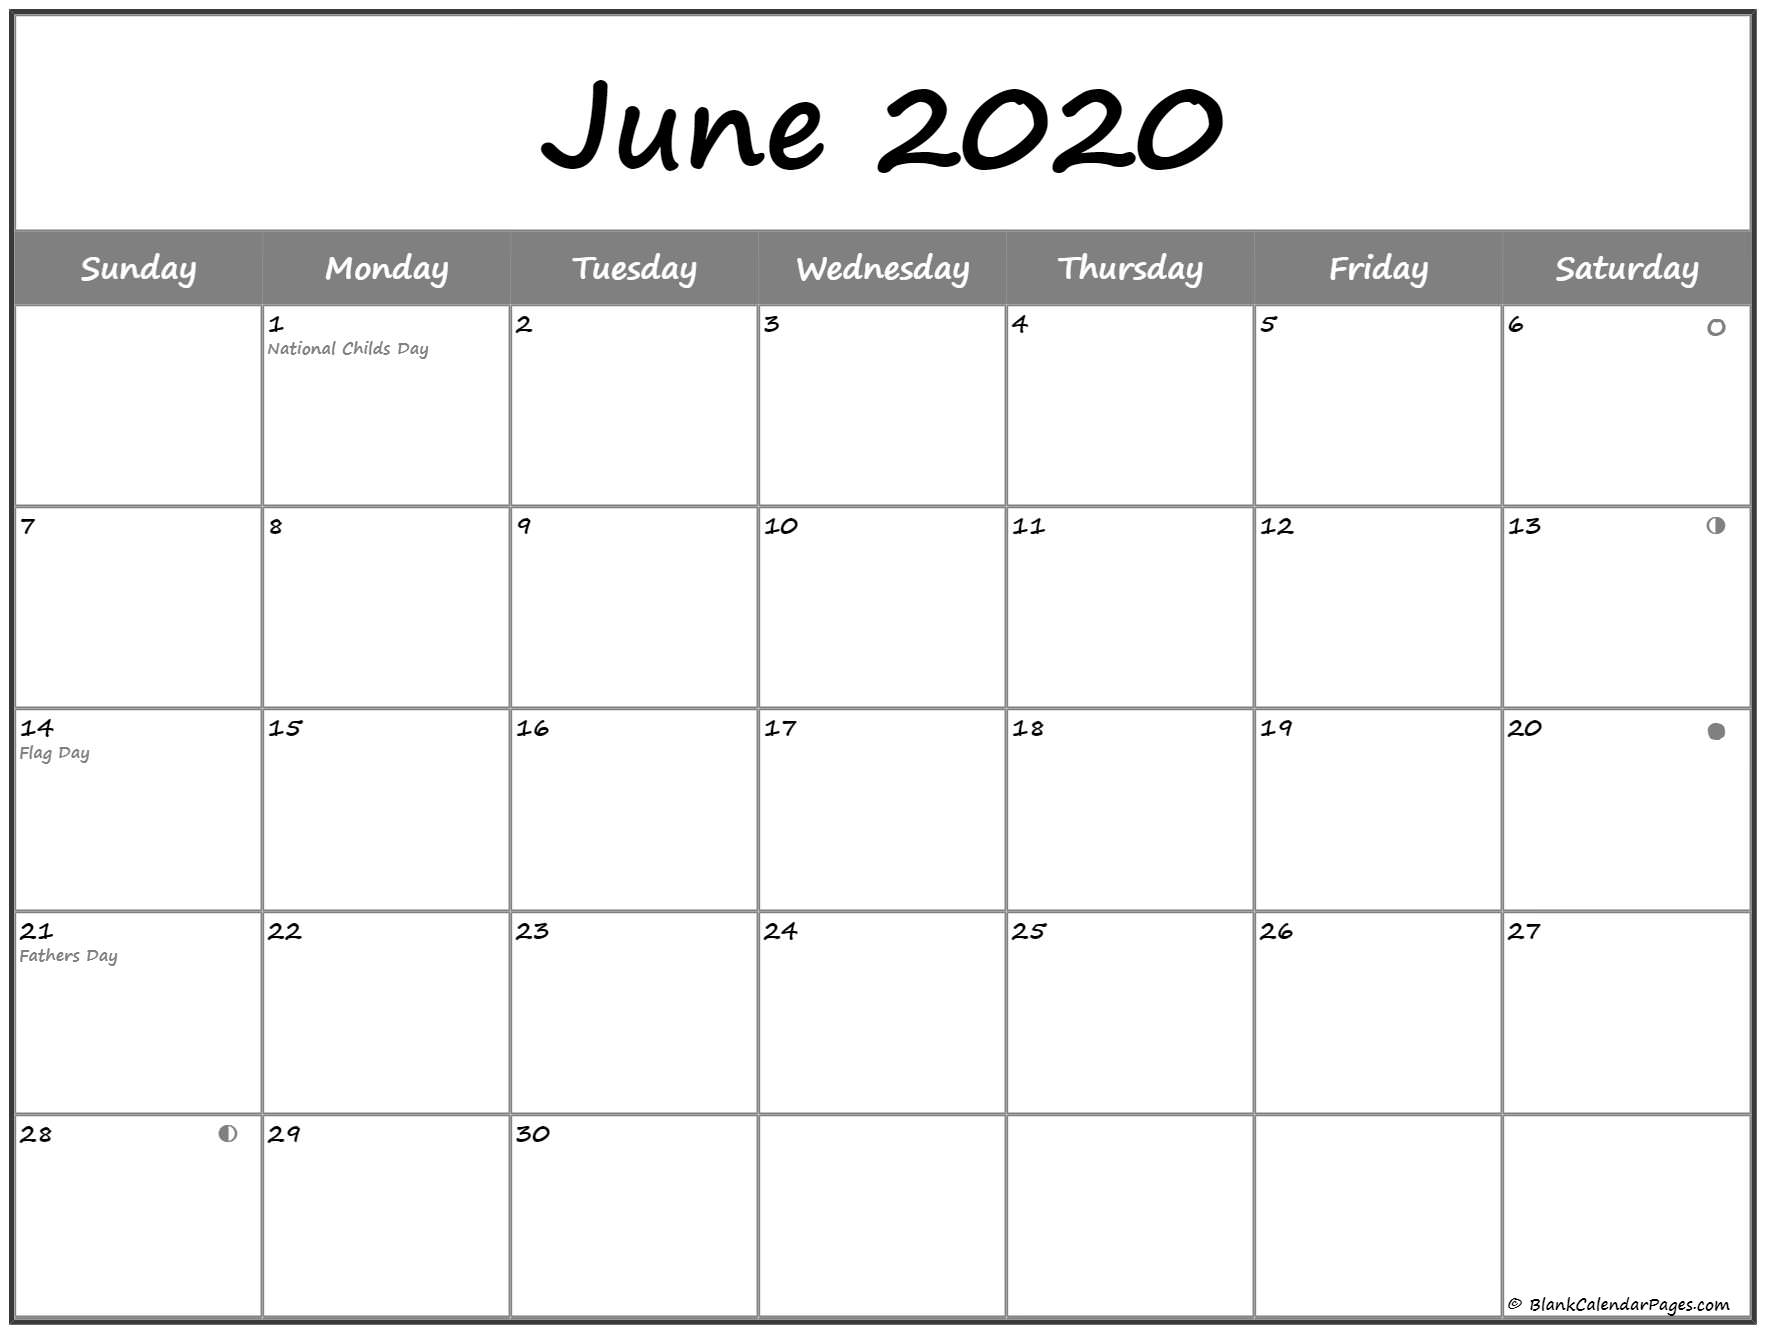 June 2020 Lunar Calendar | Moon Phase Calendar